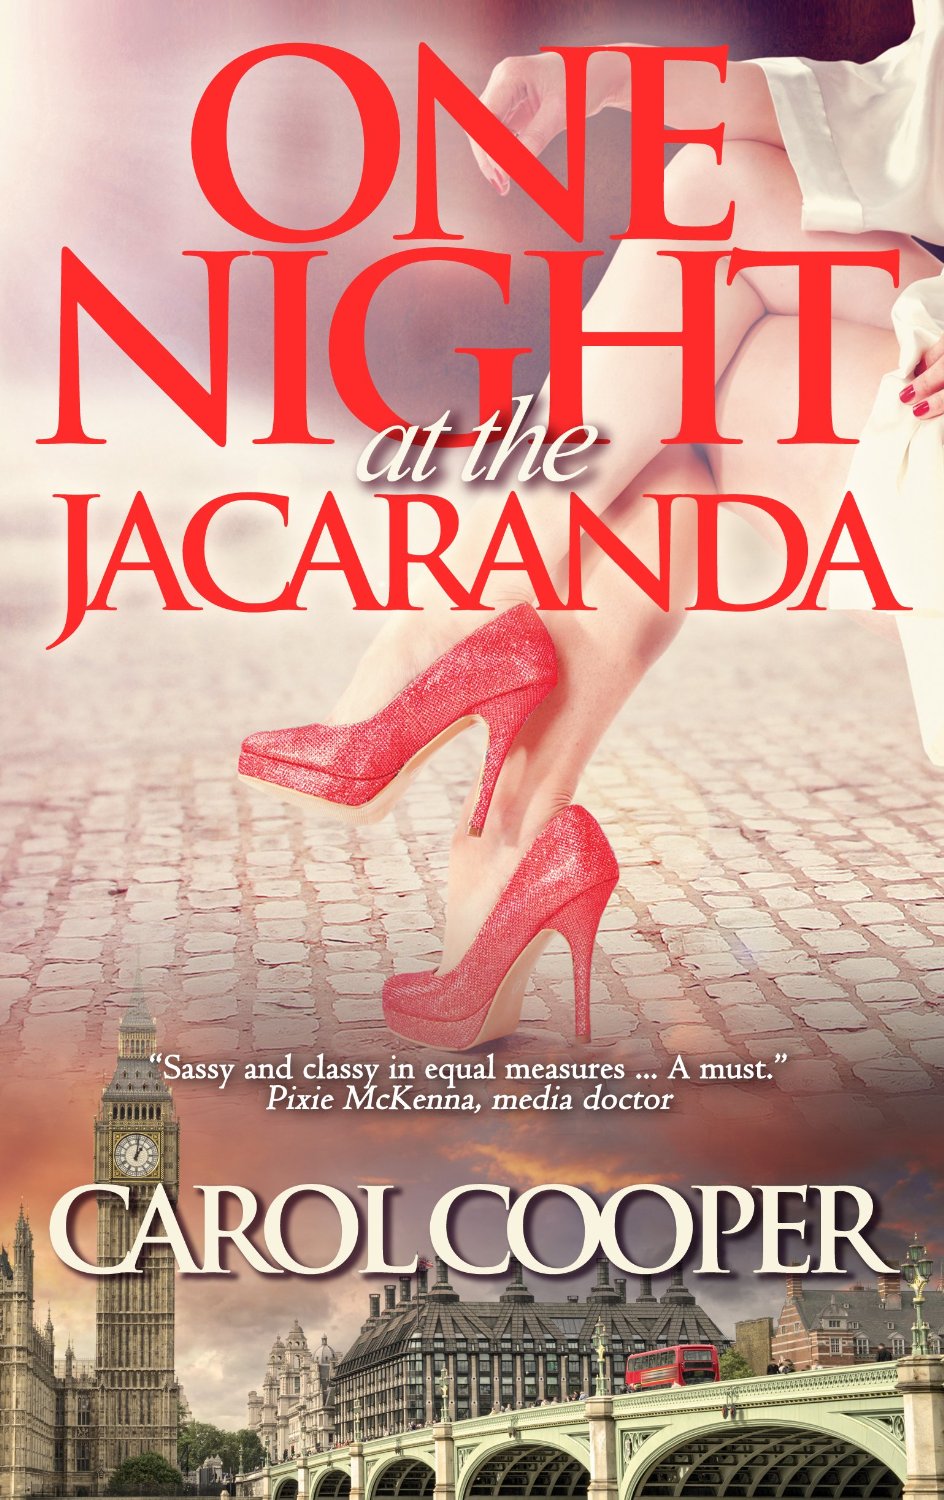 One Night at the Jacaranda by Carol Cooper